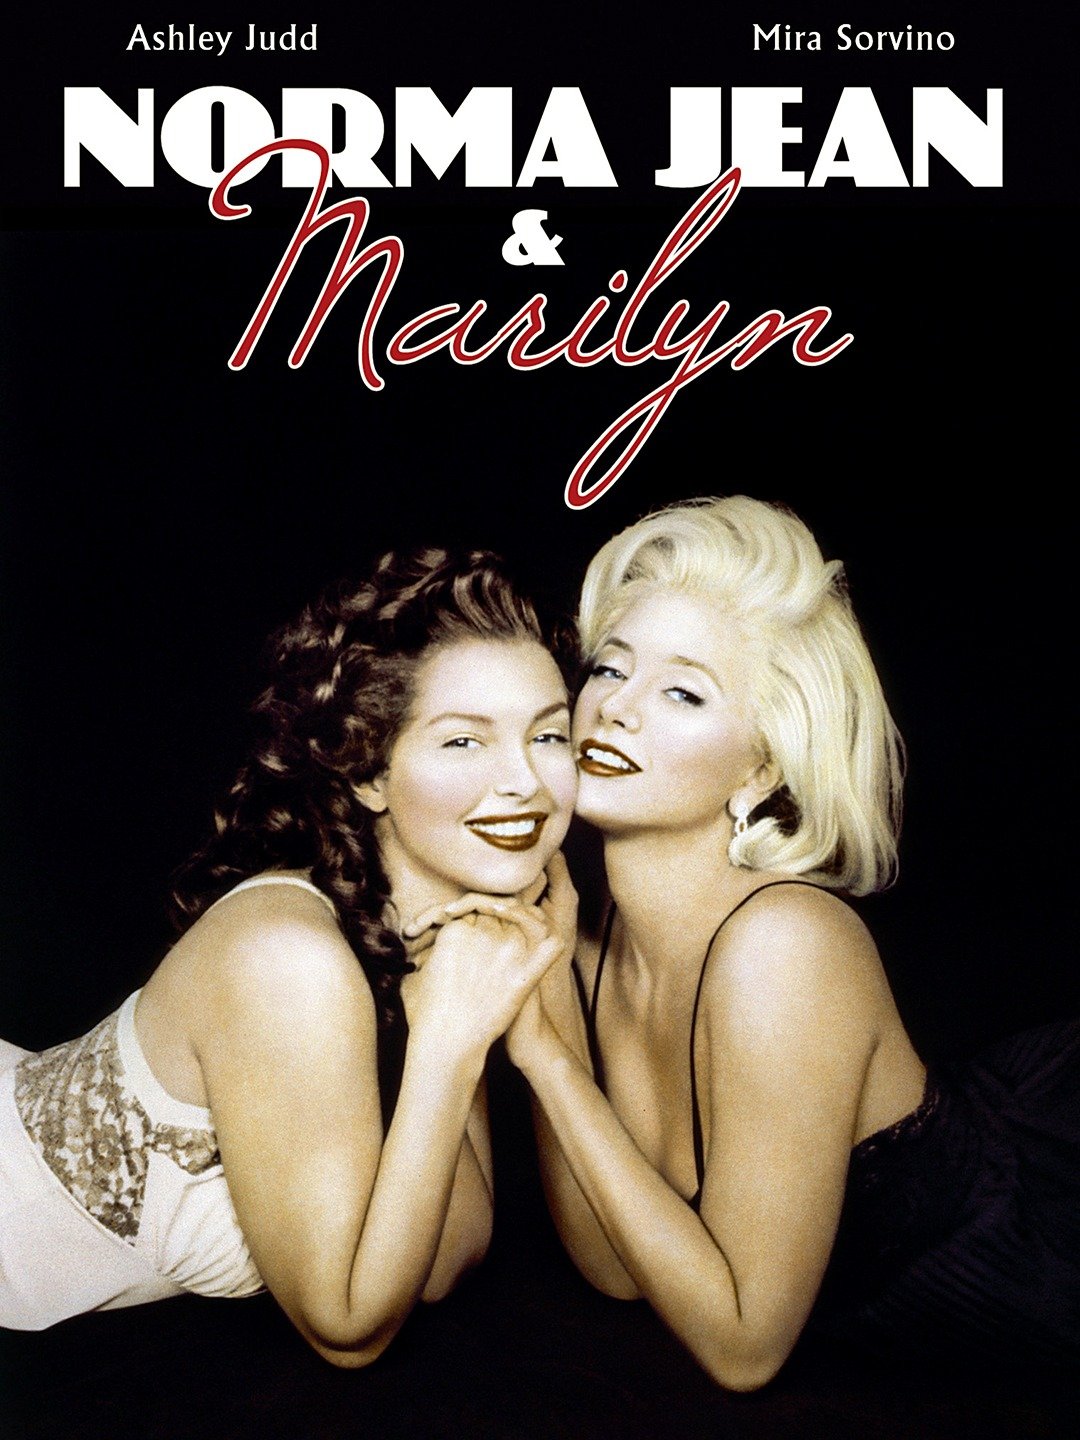 Norma Jean & Marilyn.